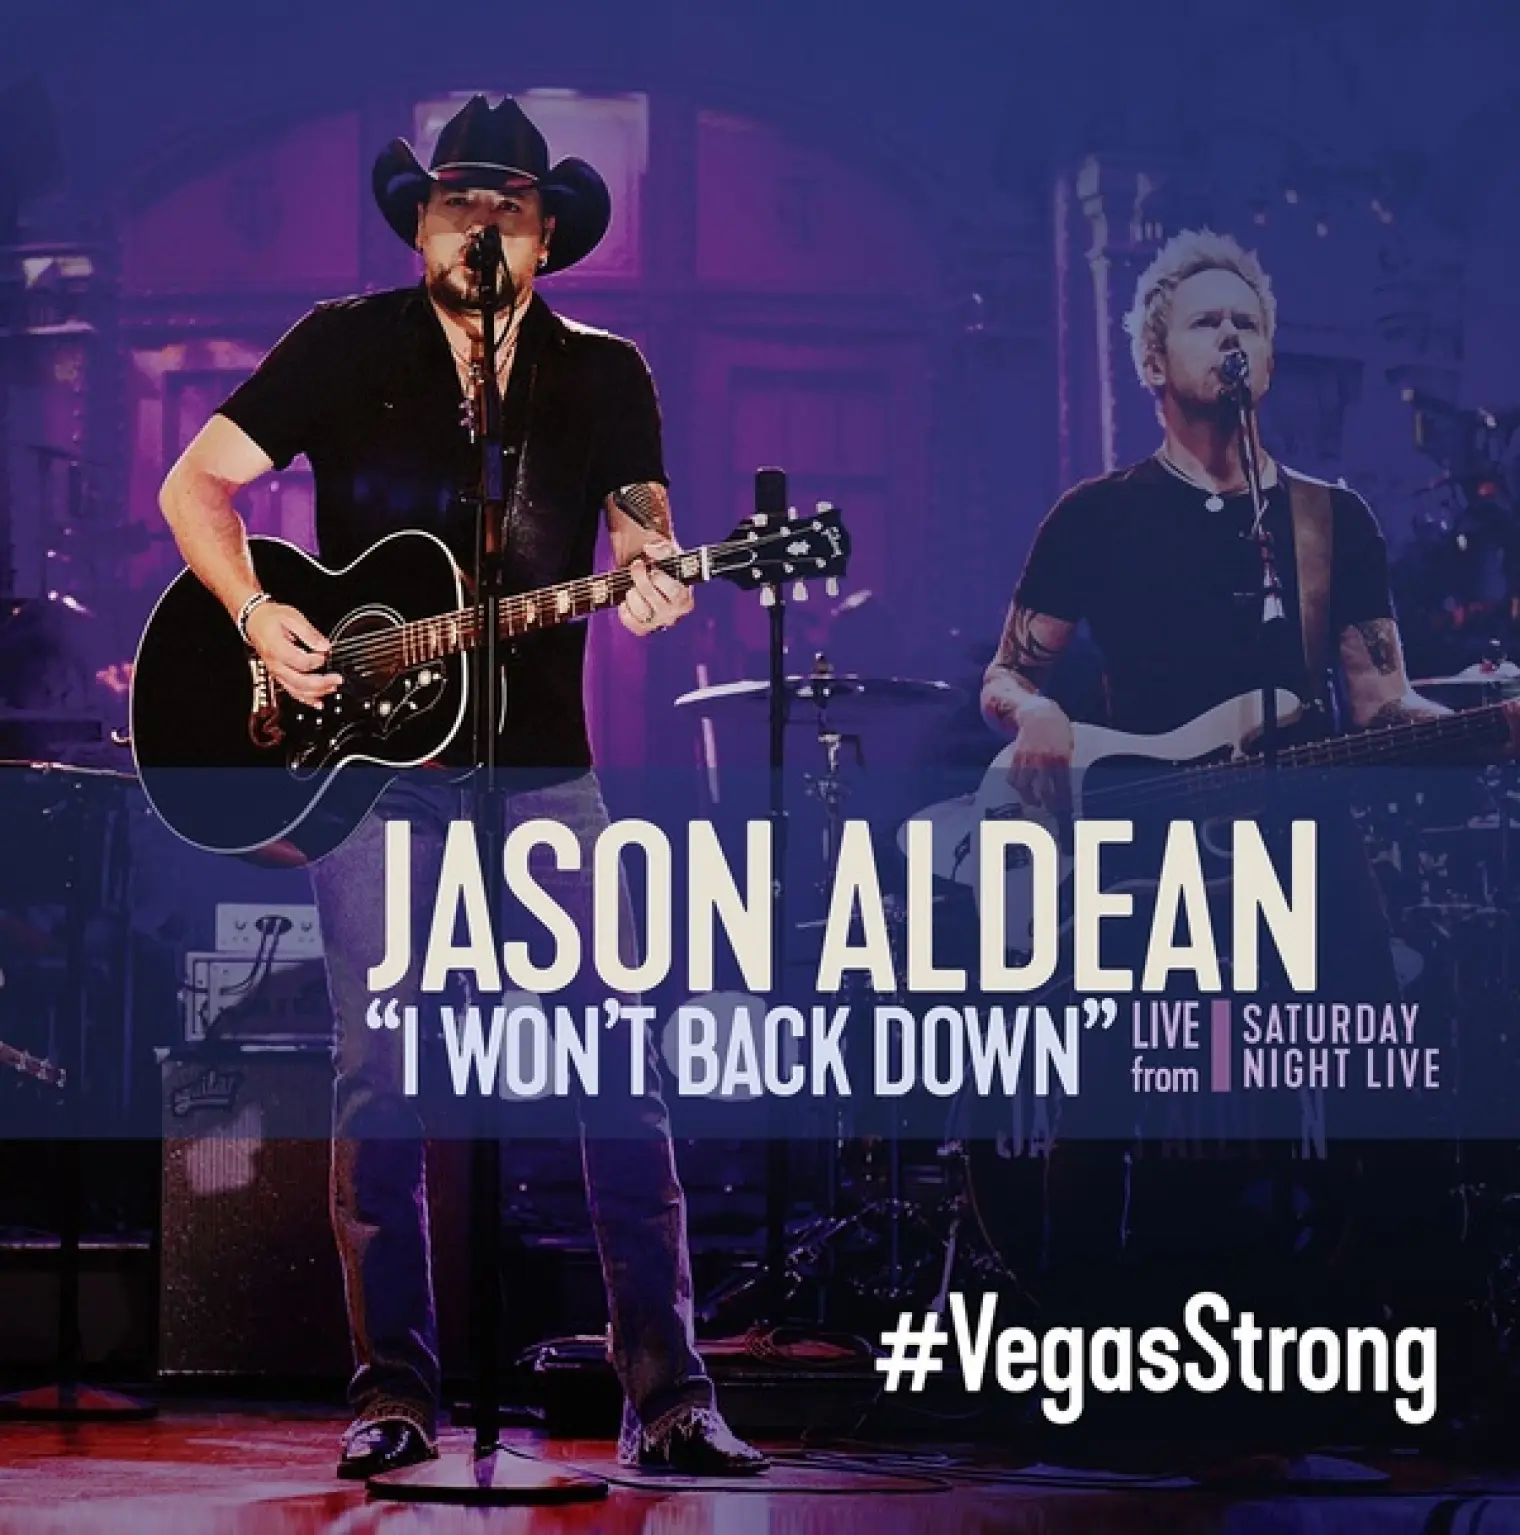 I Won't Back Down (Live from Saturday Night Live) -  Jason Aldean 